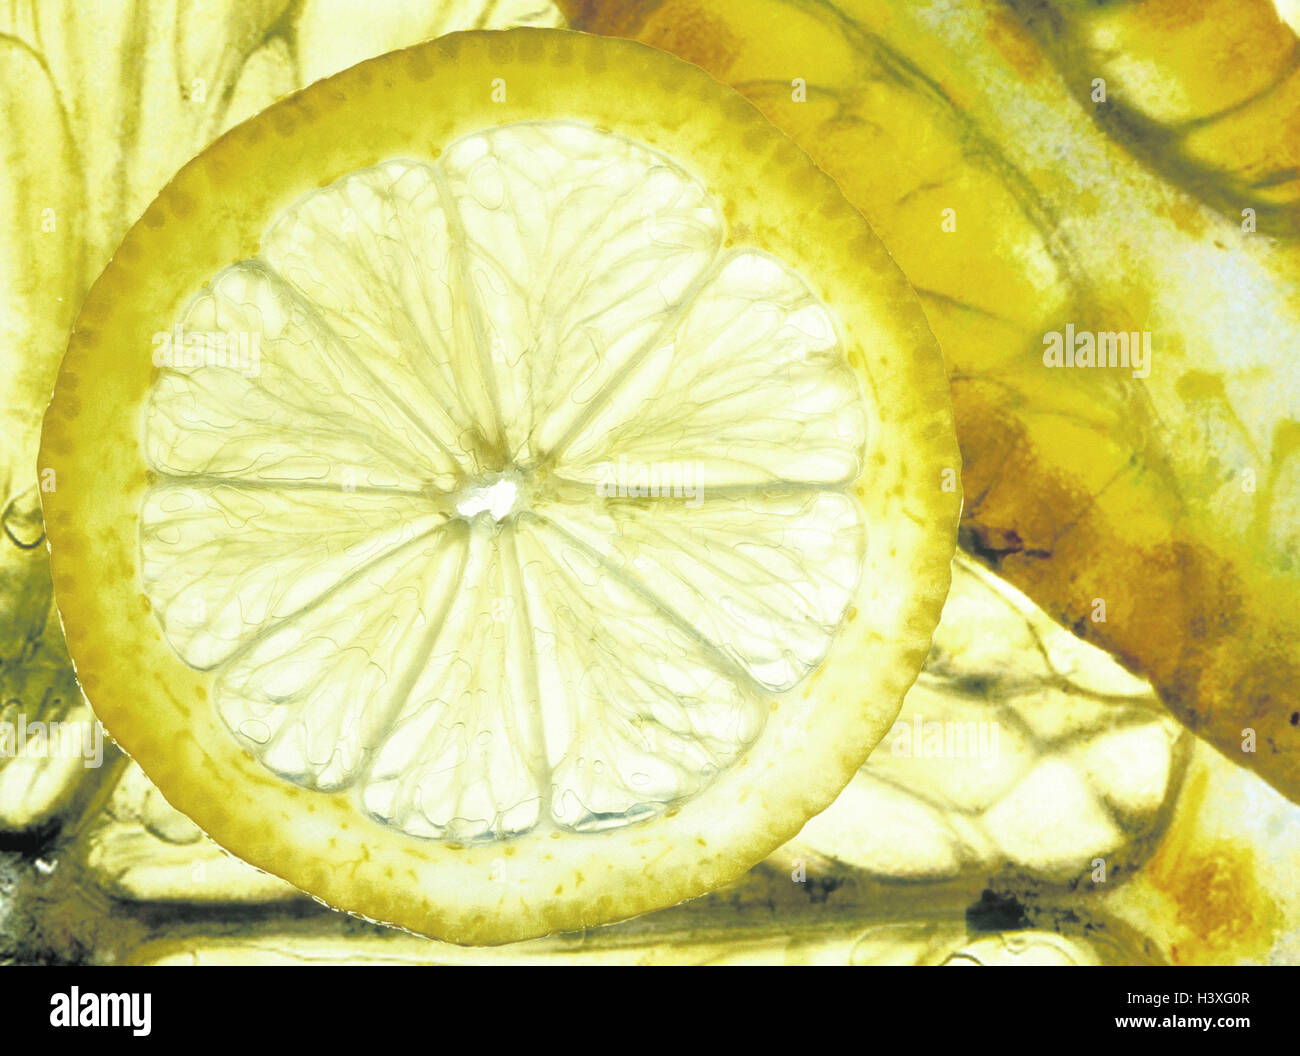 Lemons, slice lemon, close up, Still life, fruit, fruits, tropical fruits, citrus fruits, Agrumen, Citroideae, lemon, Citrus limon, slice, cut open, healthy, vitamins, rich in vitamins, vitamin C, yellow, acidly, transparent, Stock Photo